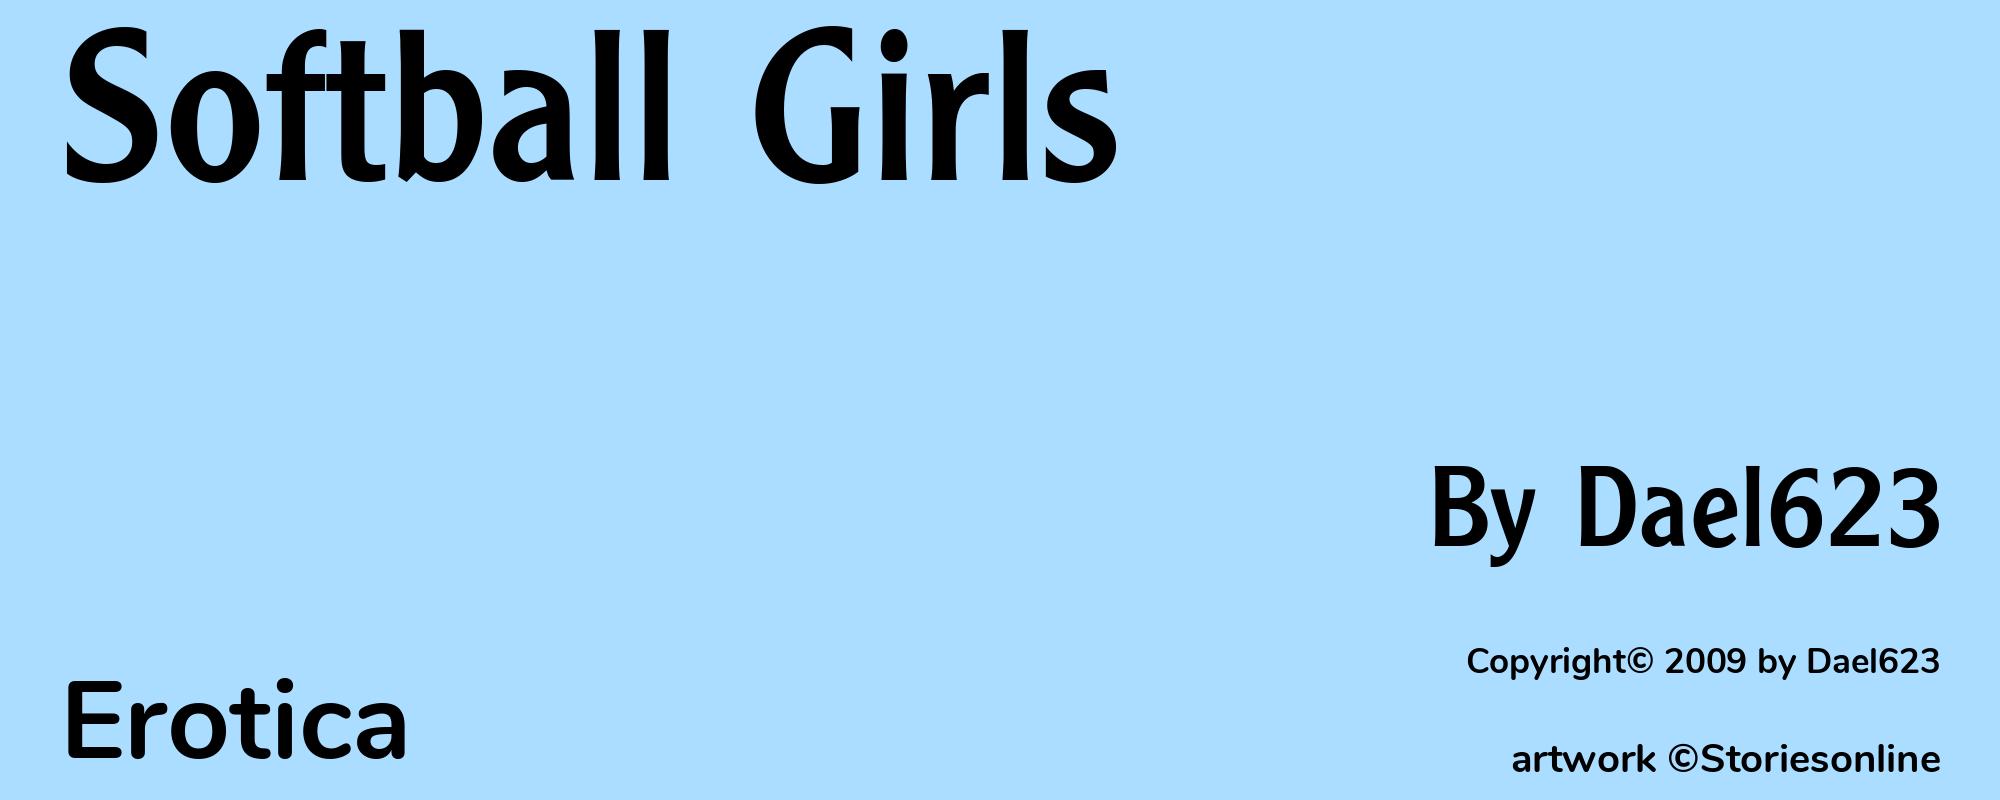 Softball Girls - Cover